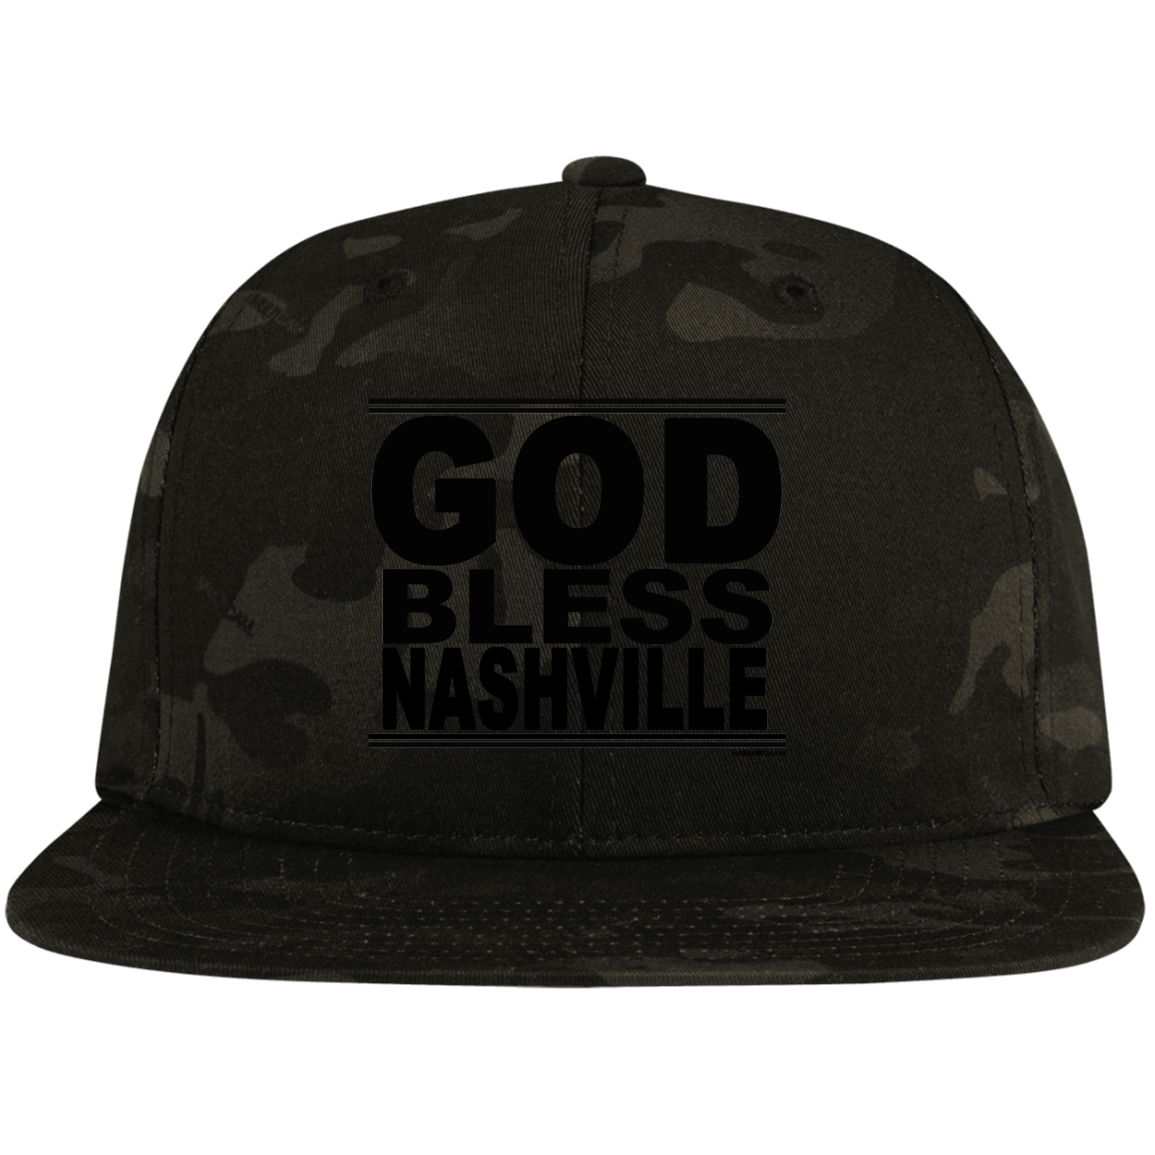 #GodBlessNashville - Snapback Hat